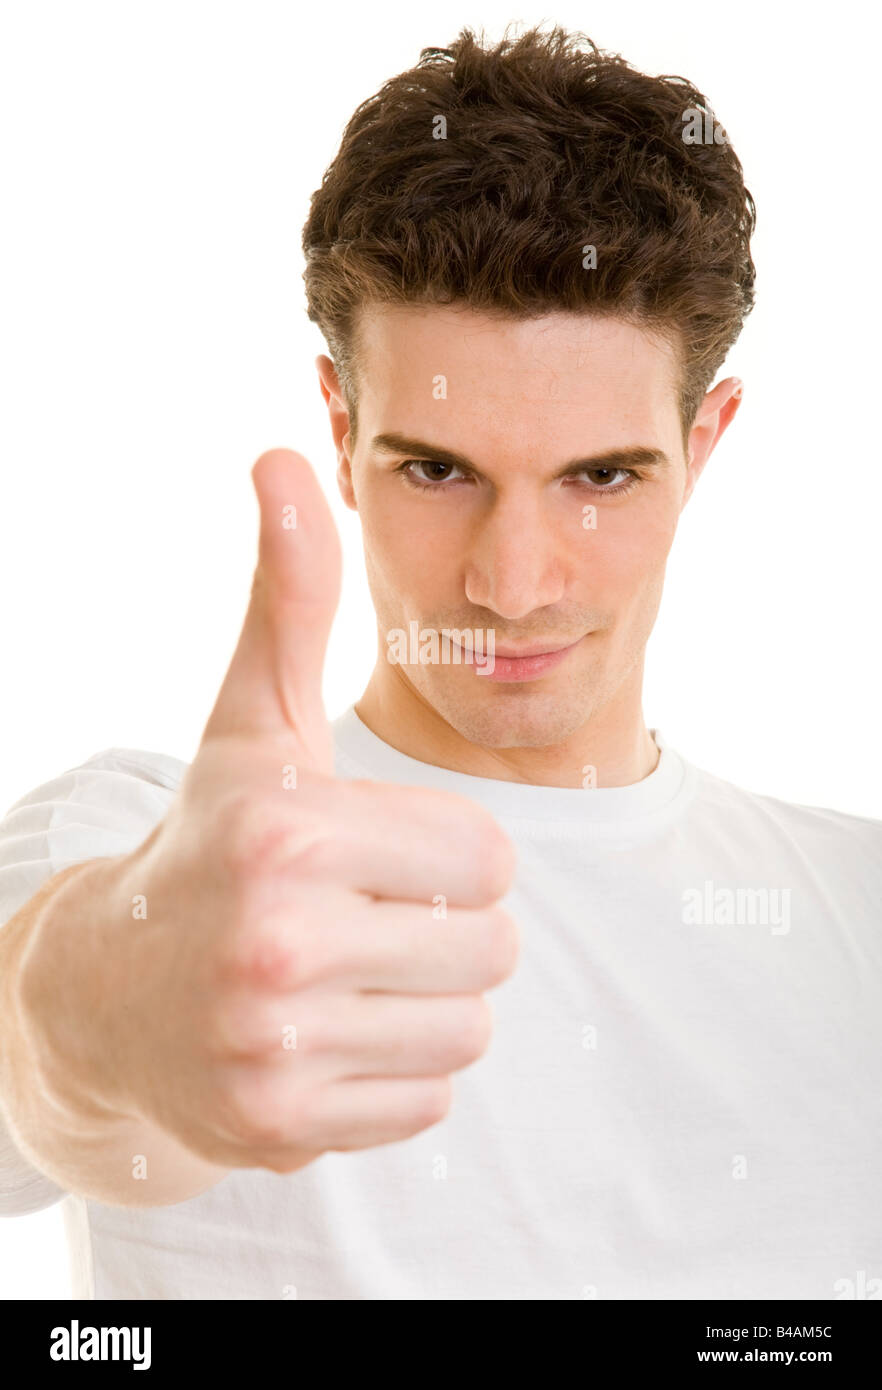 man showing his thumb Stock Photo